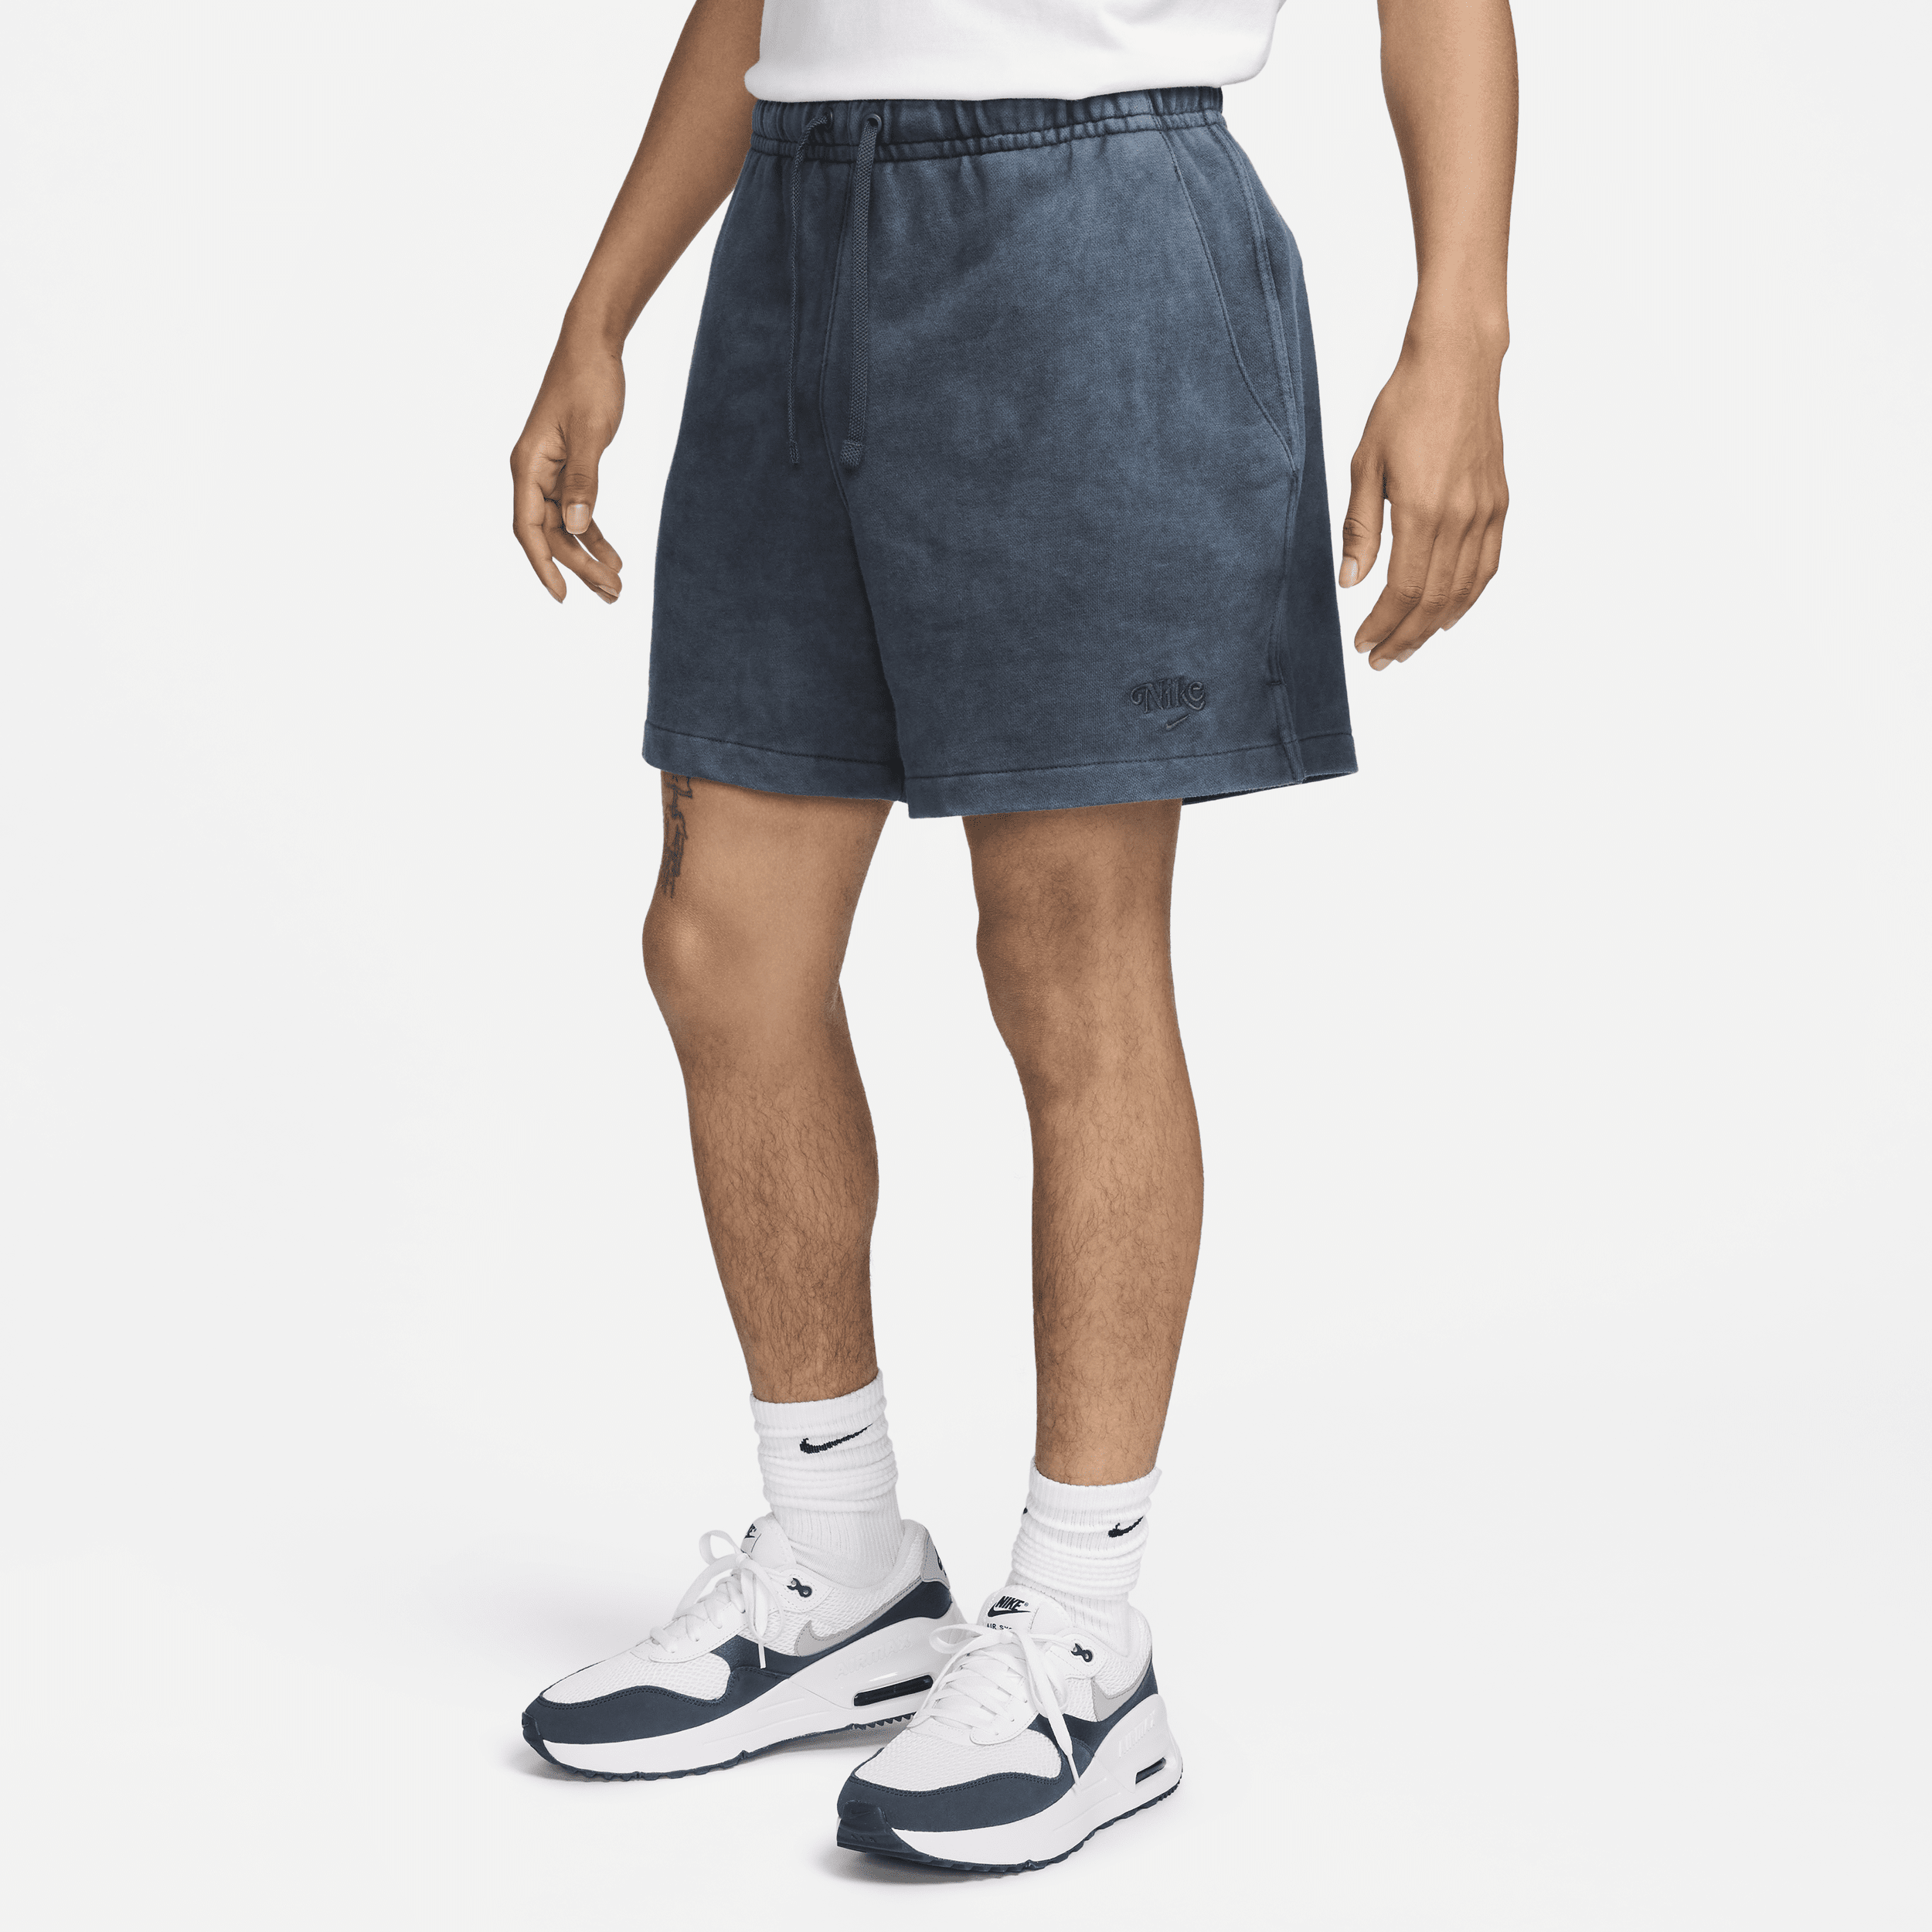 Shorts Flow in French Terry Nike Club Fleece – Uomo - Nero